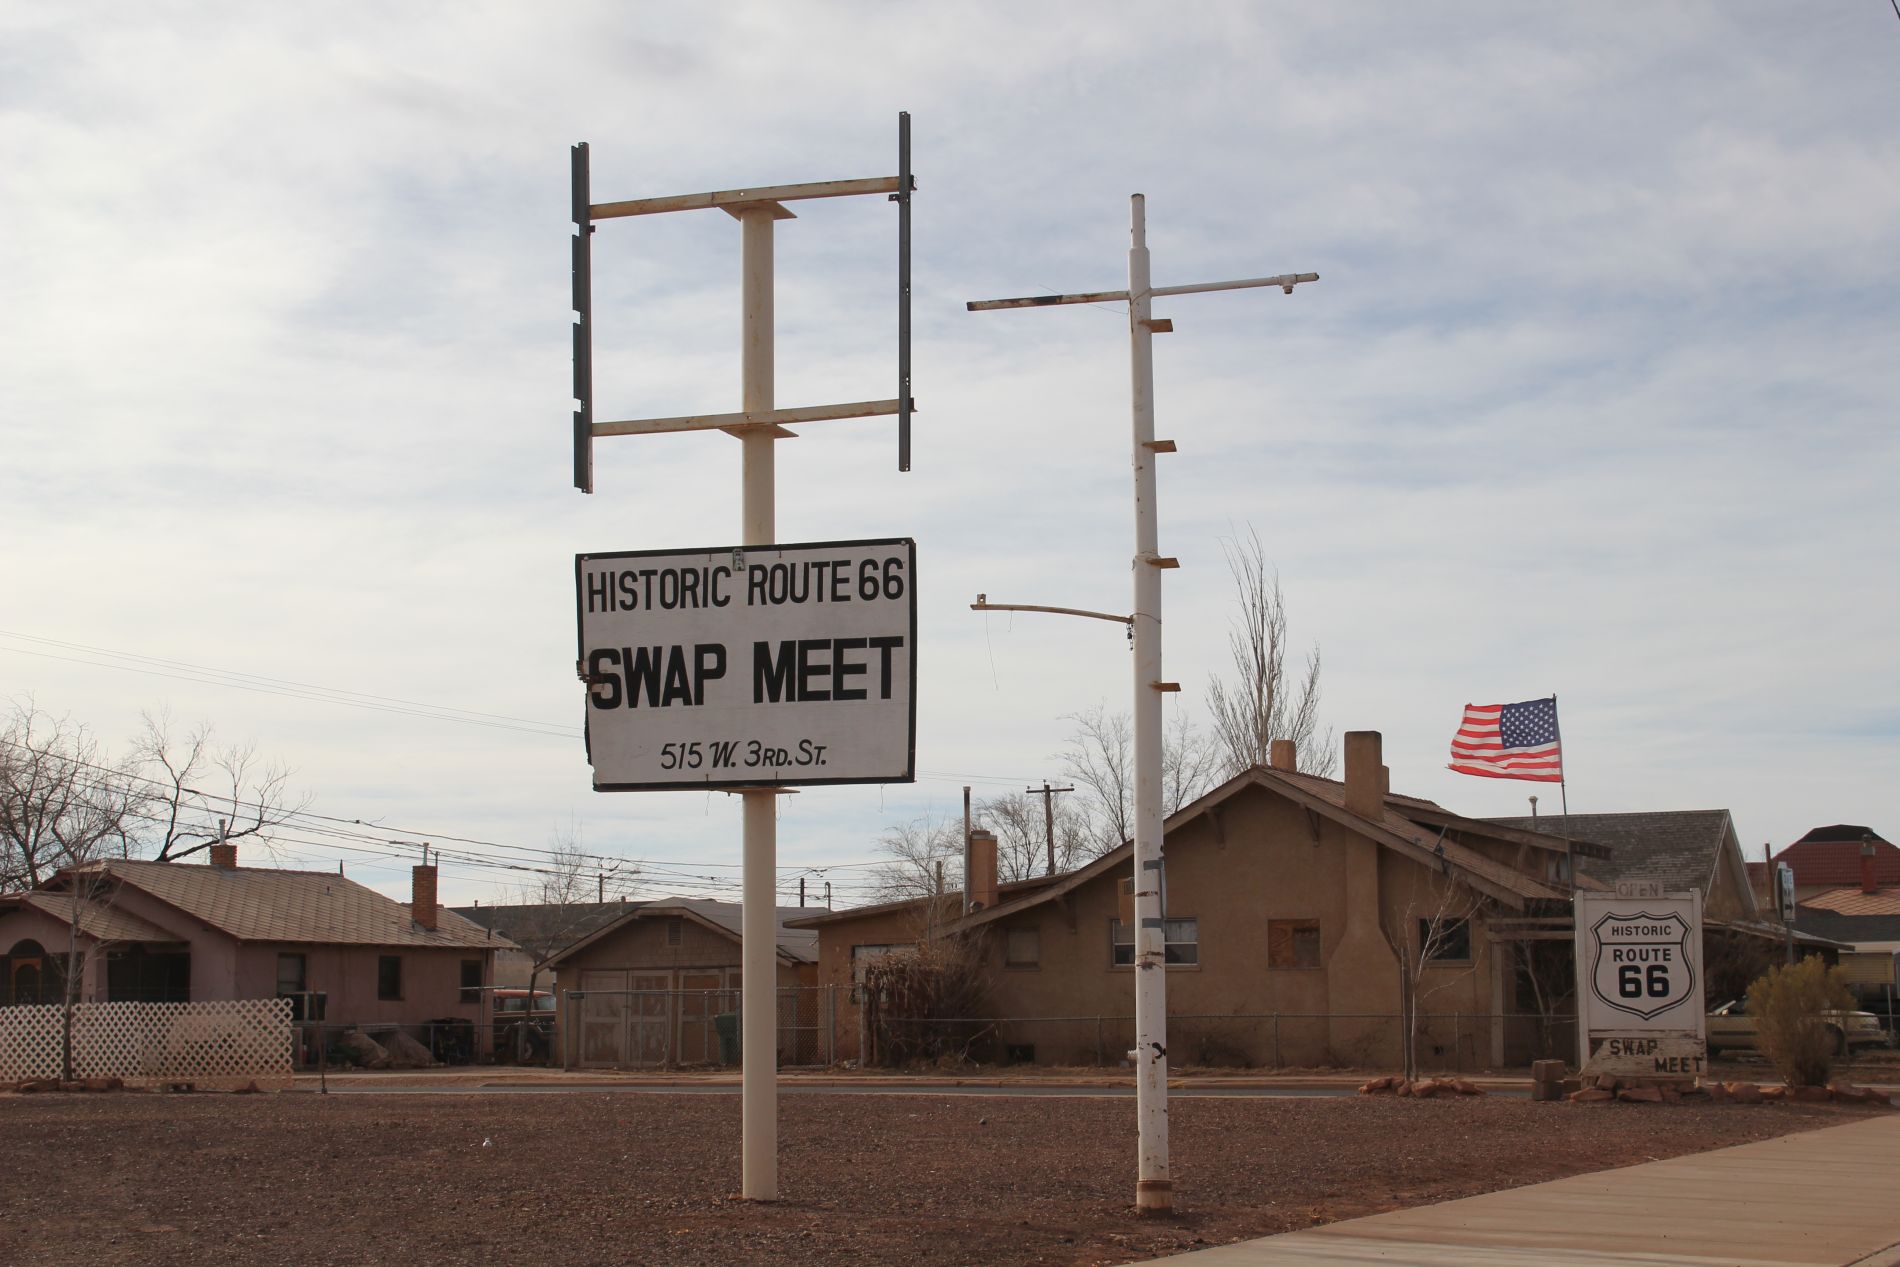 Swap Meet in Kingman, Arizona